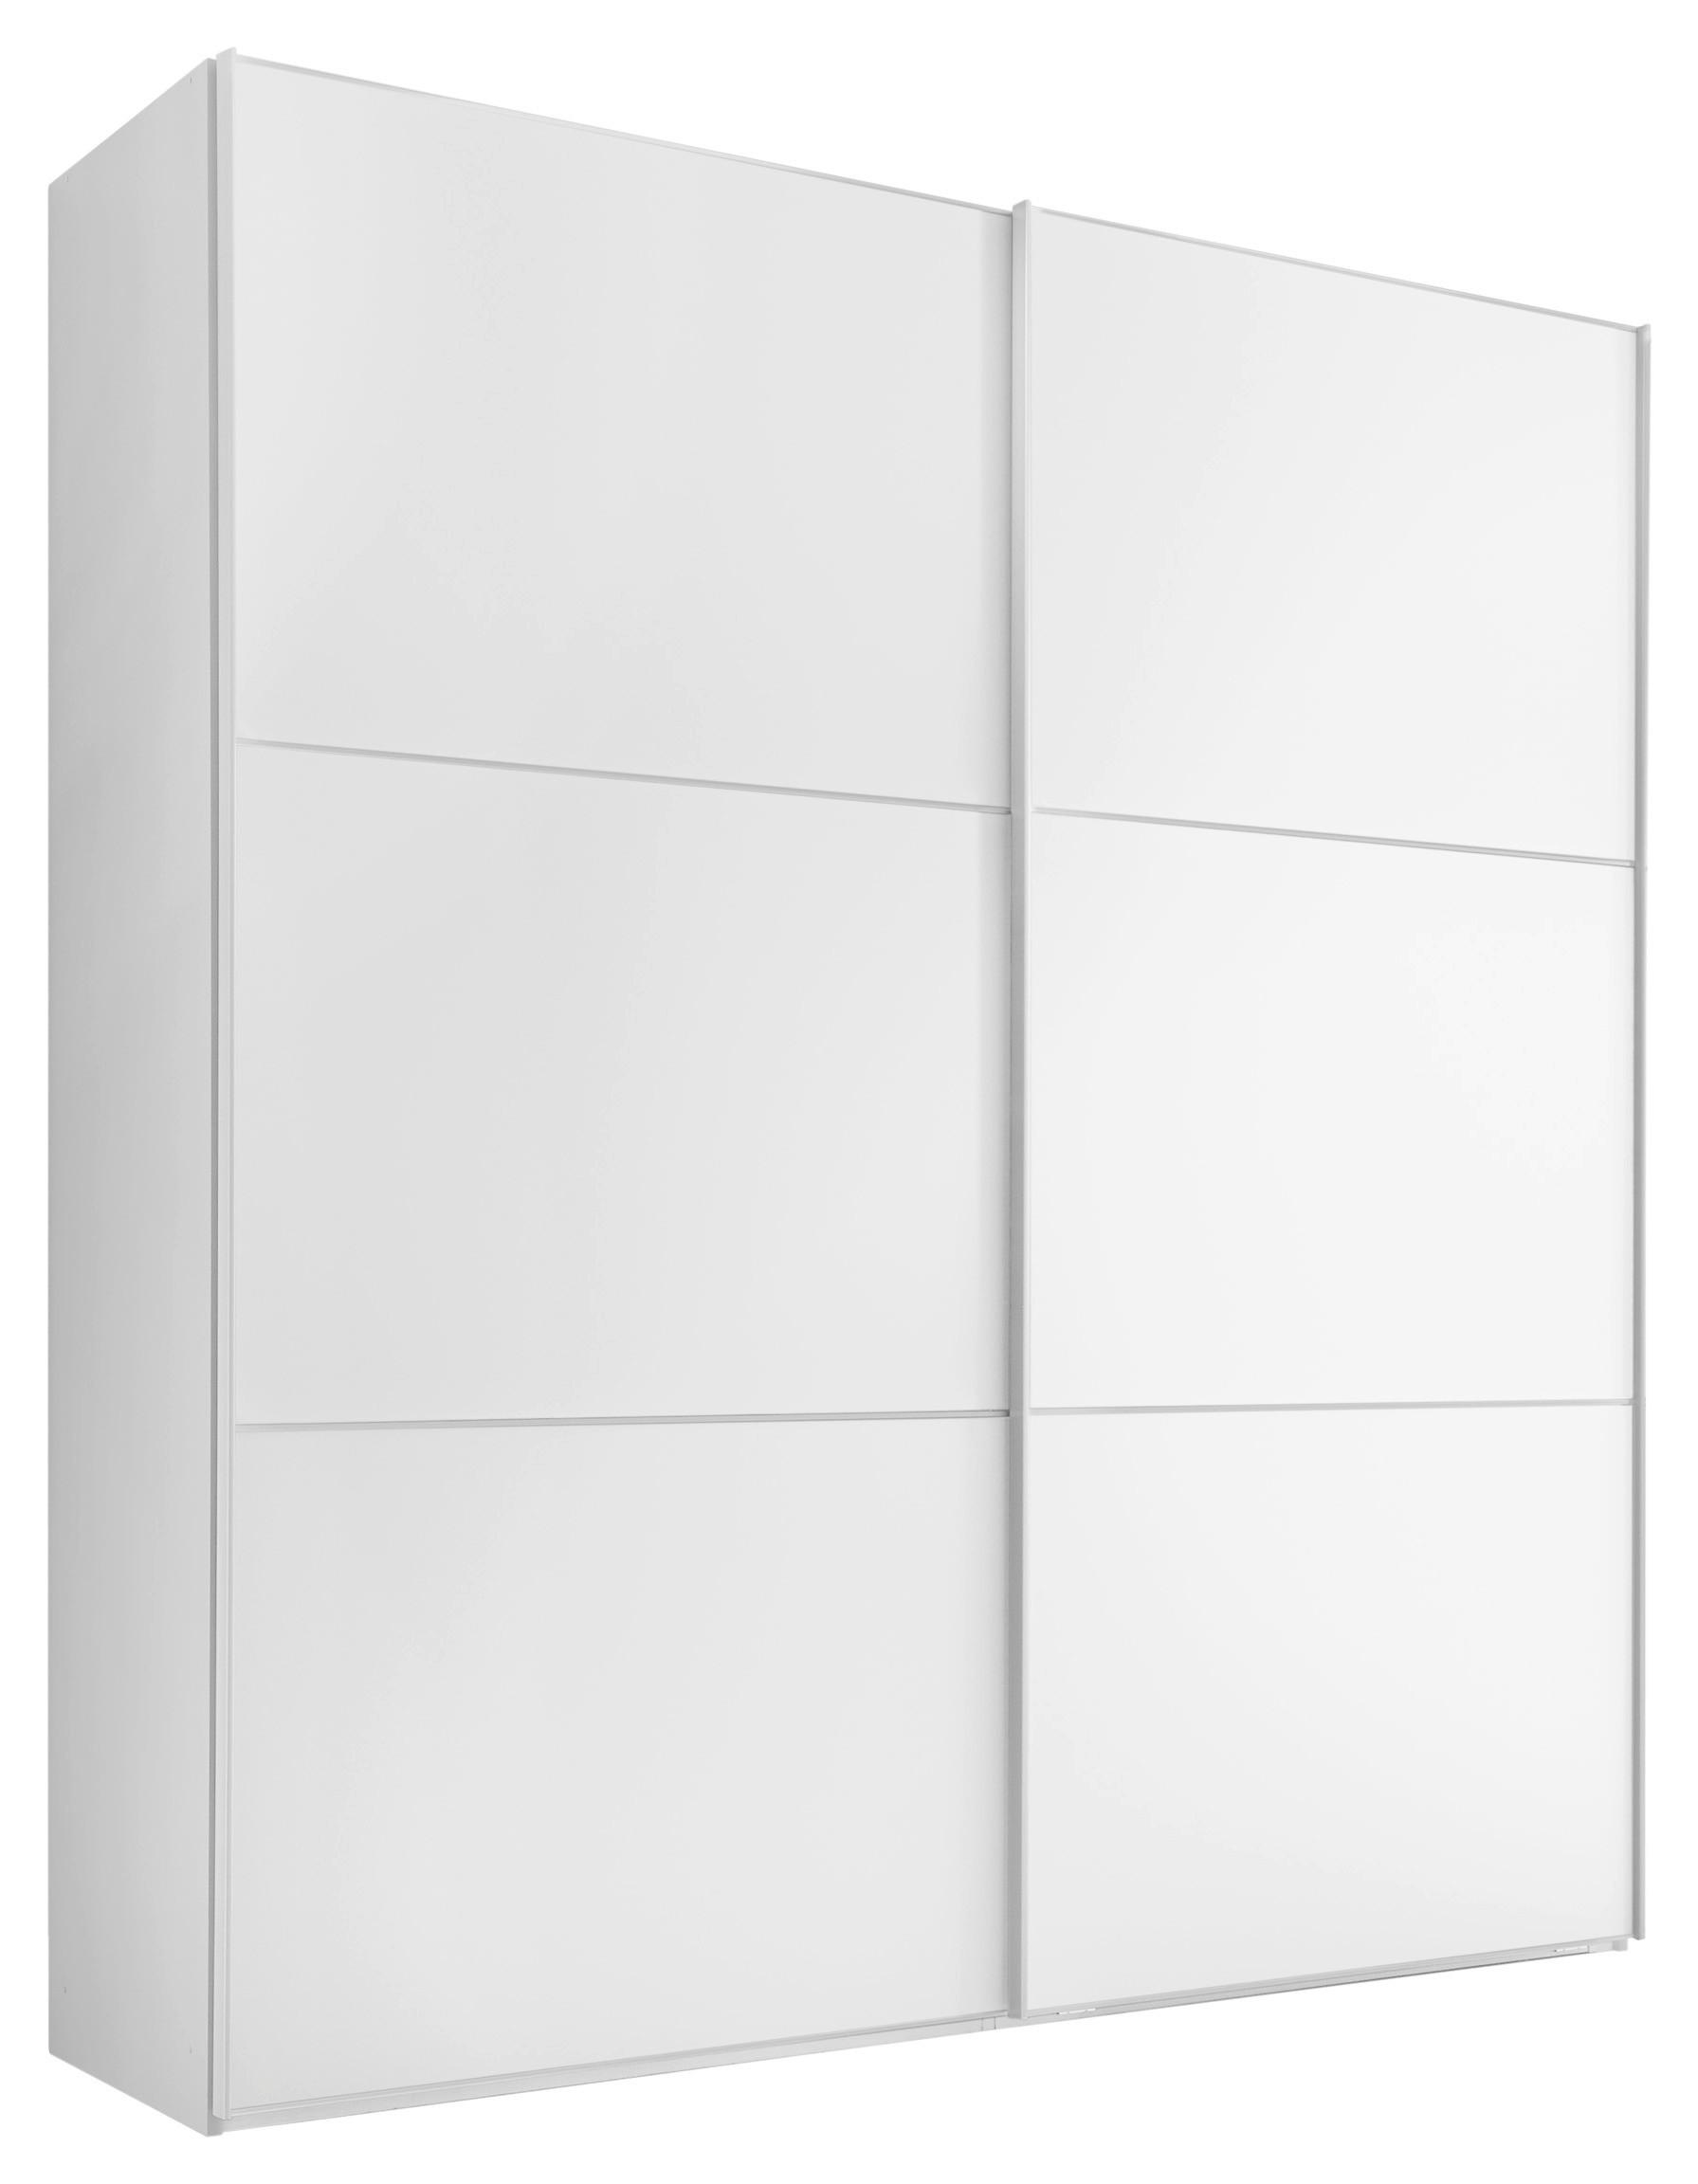 Skříň S Posuvnými Dveřmi Includo, Bílá - bílá/barvy hliníku, Moderní, kov/kompozitní dřevo (200/222/68cm)